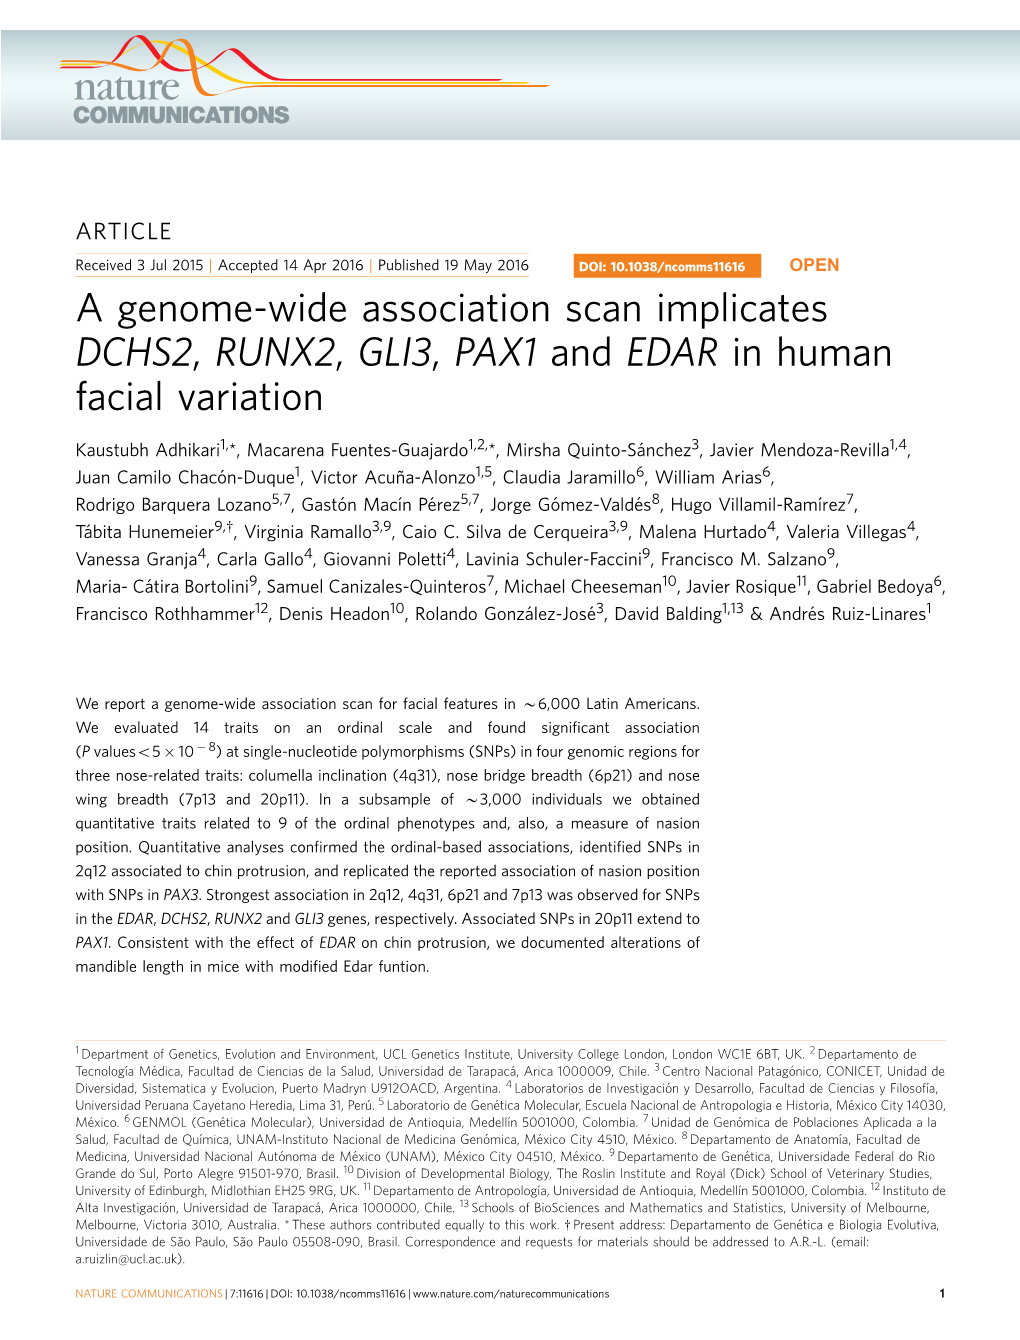 A Genome-Wide Association Scan Implicates DCHS2, RUNX2, GLI3, PAX1 and EDAR in Human Facial Variation